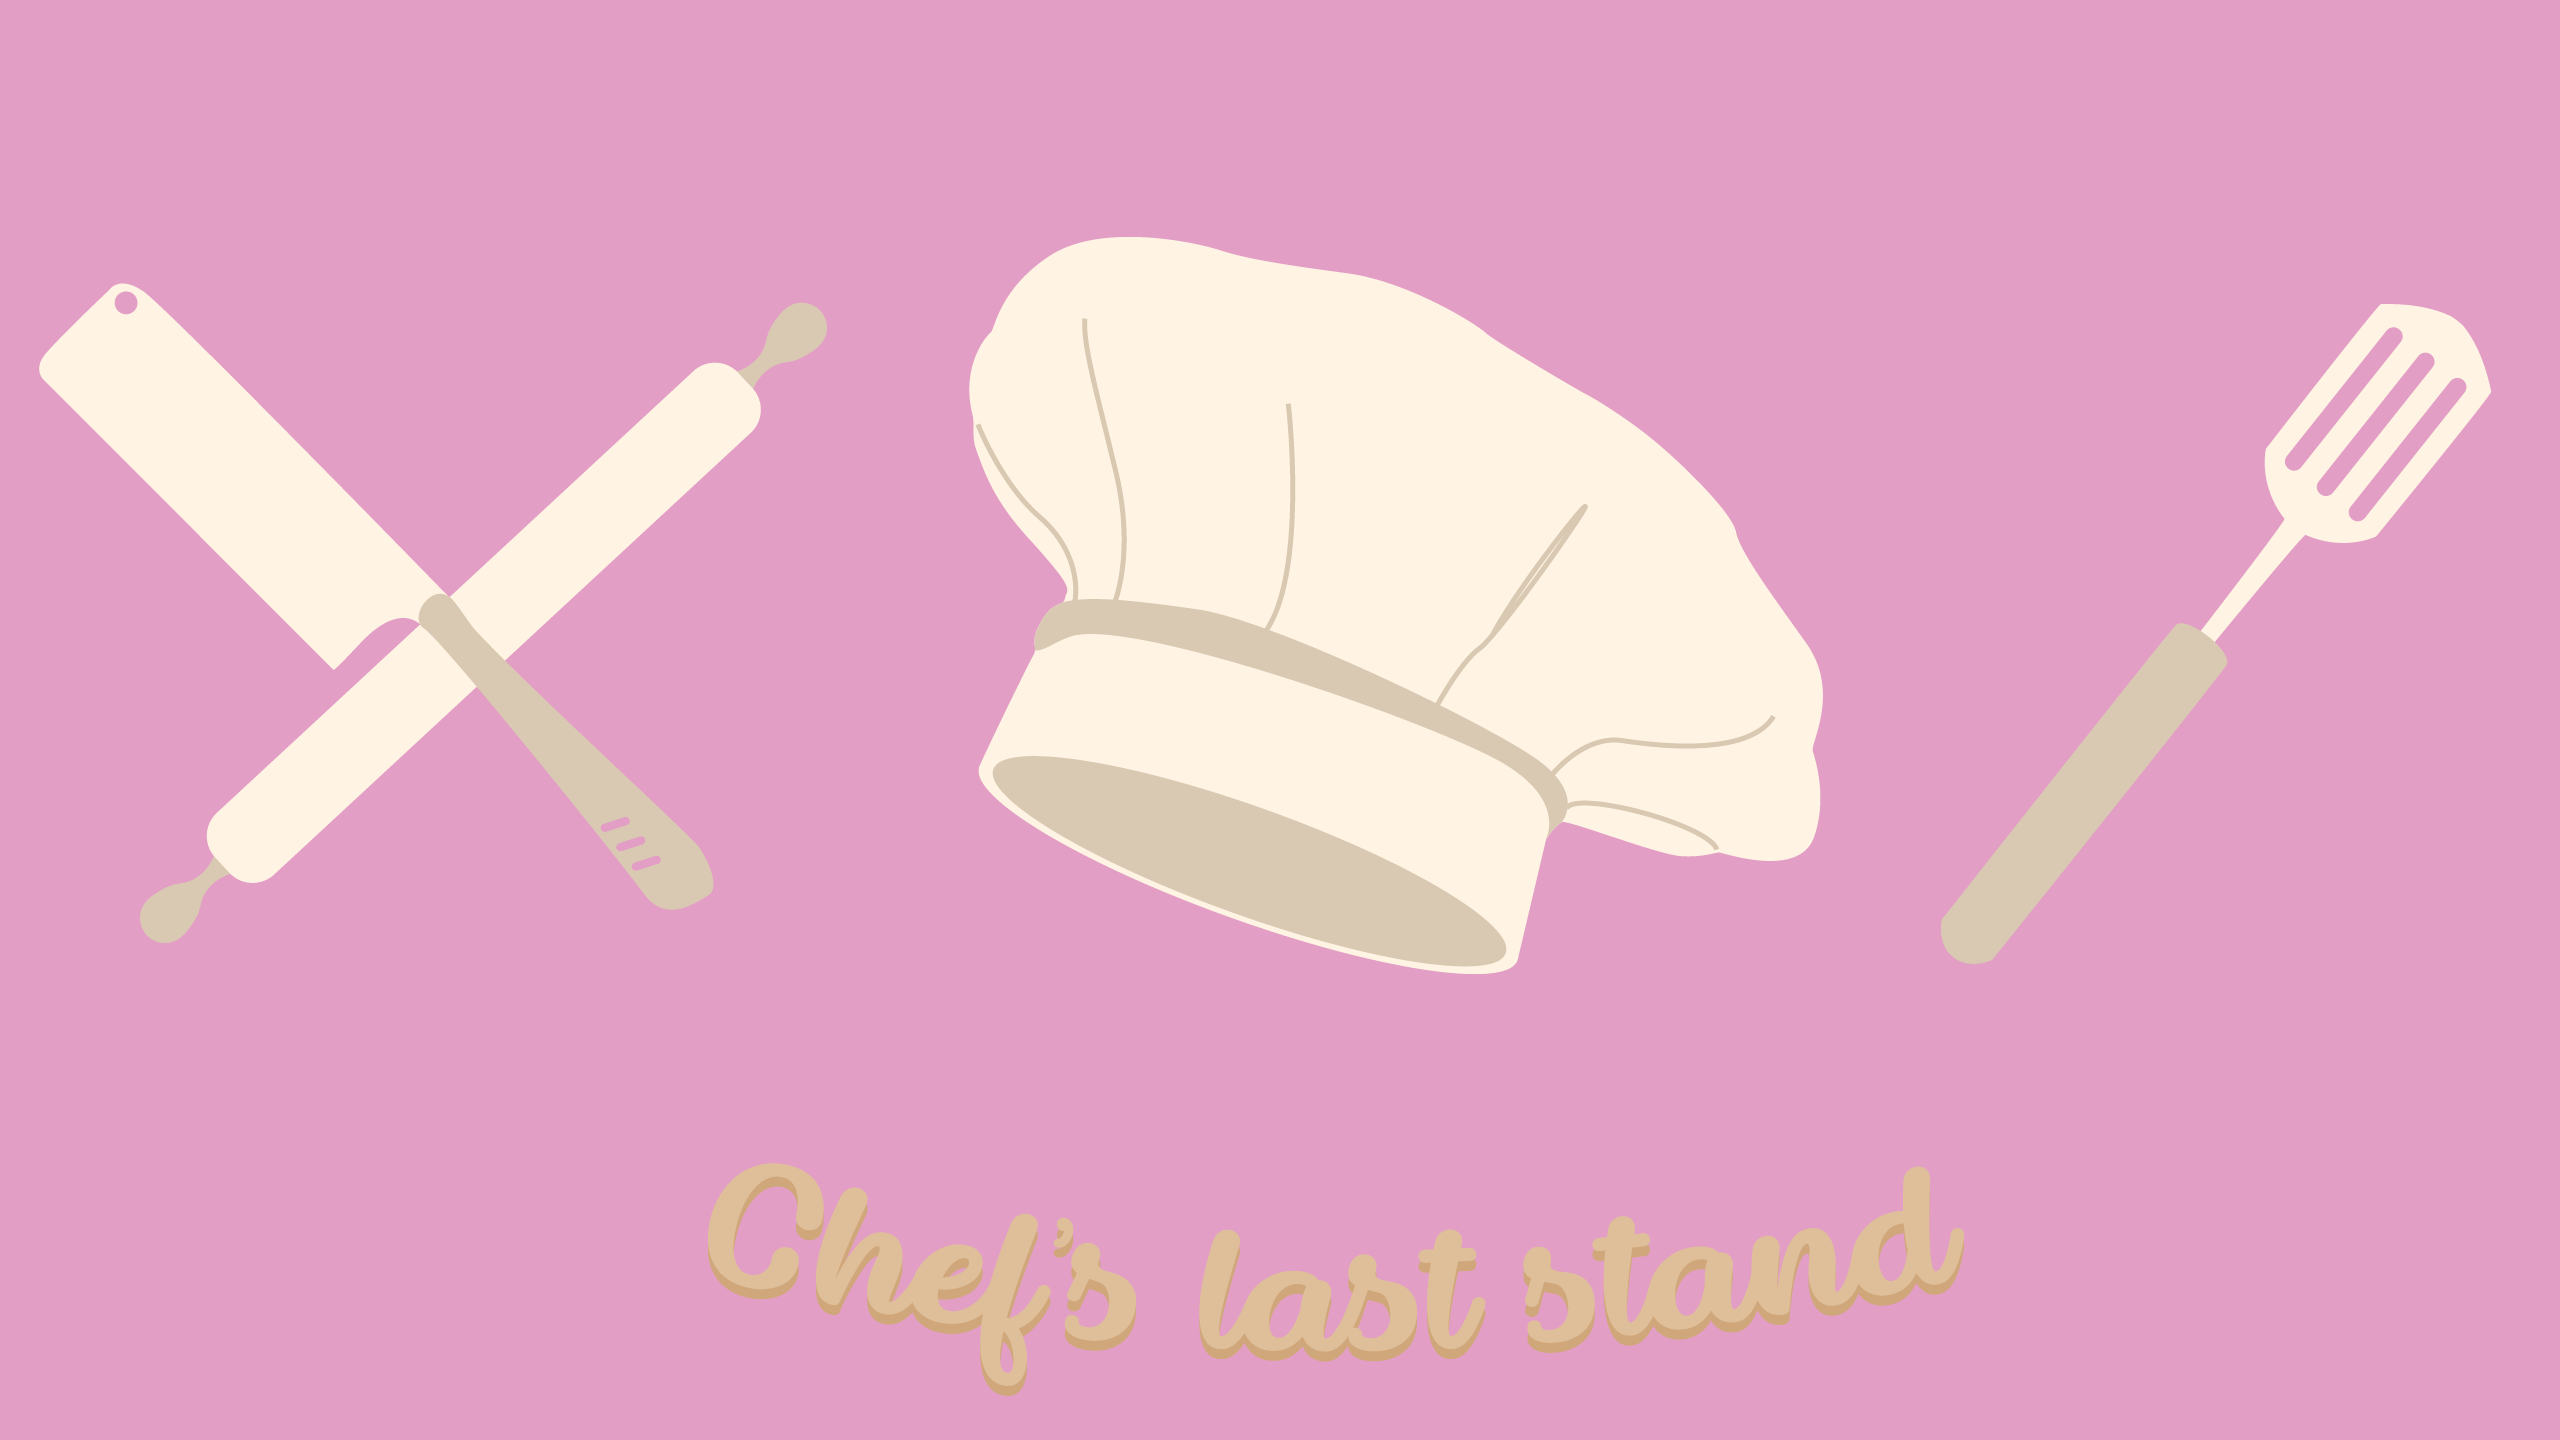 Chef's last stand